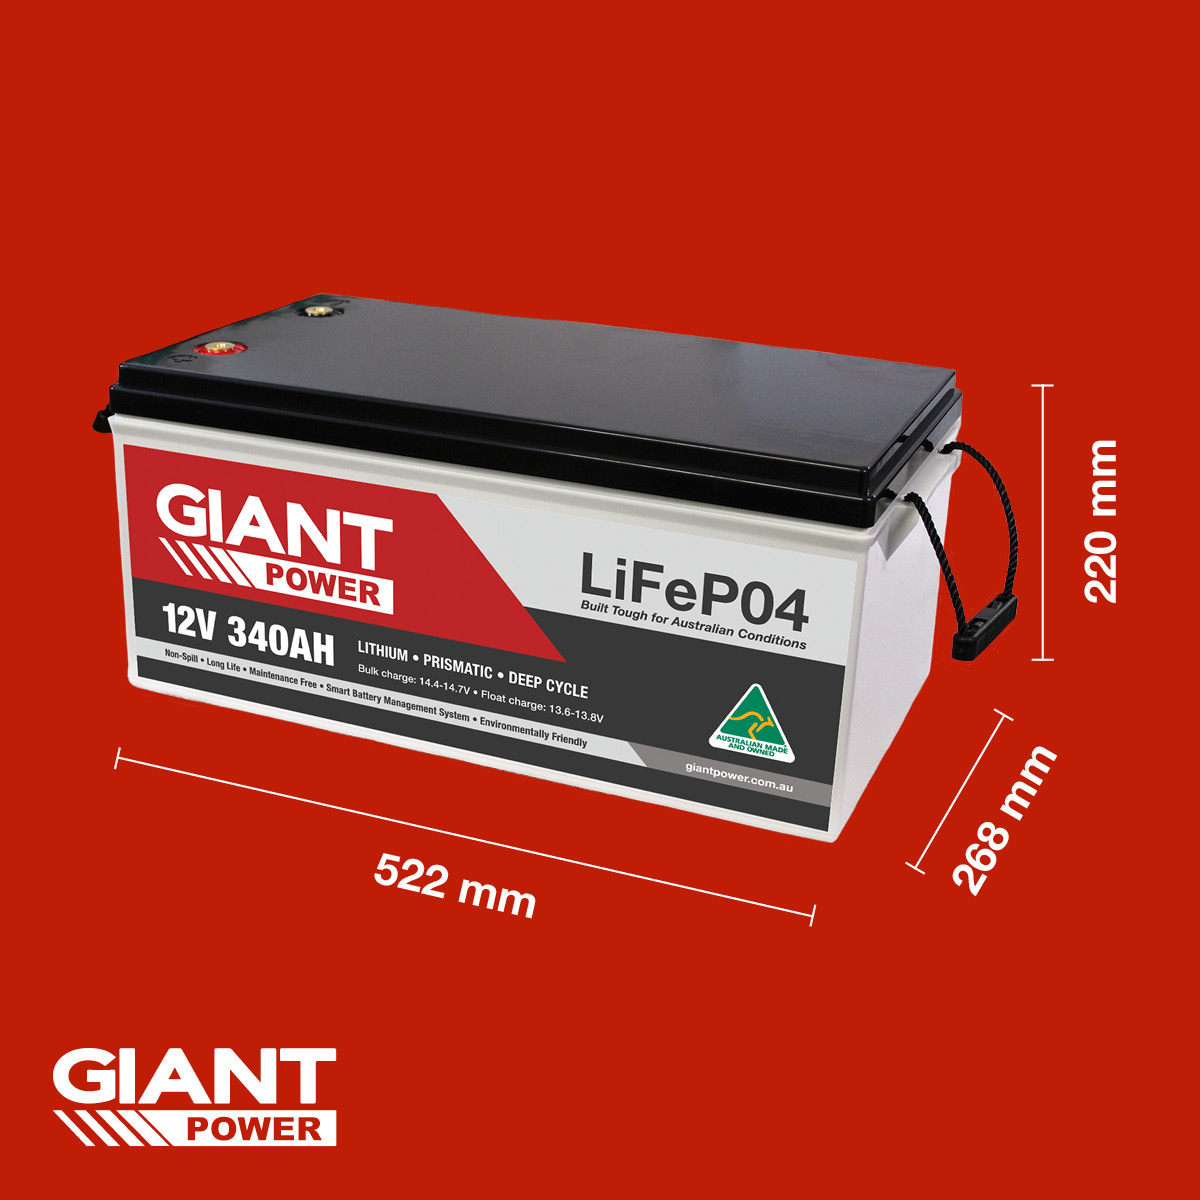 GIANT 340AH Lithium Deep Cycle Battery, 340AH Lithium Battery Australia